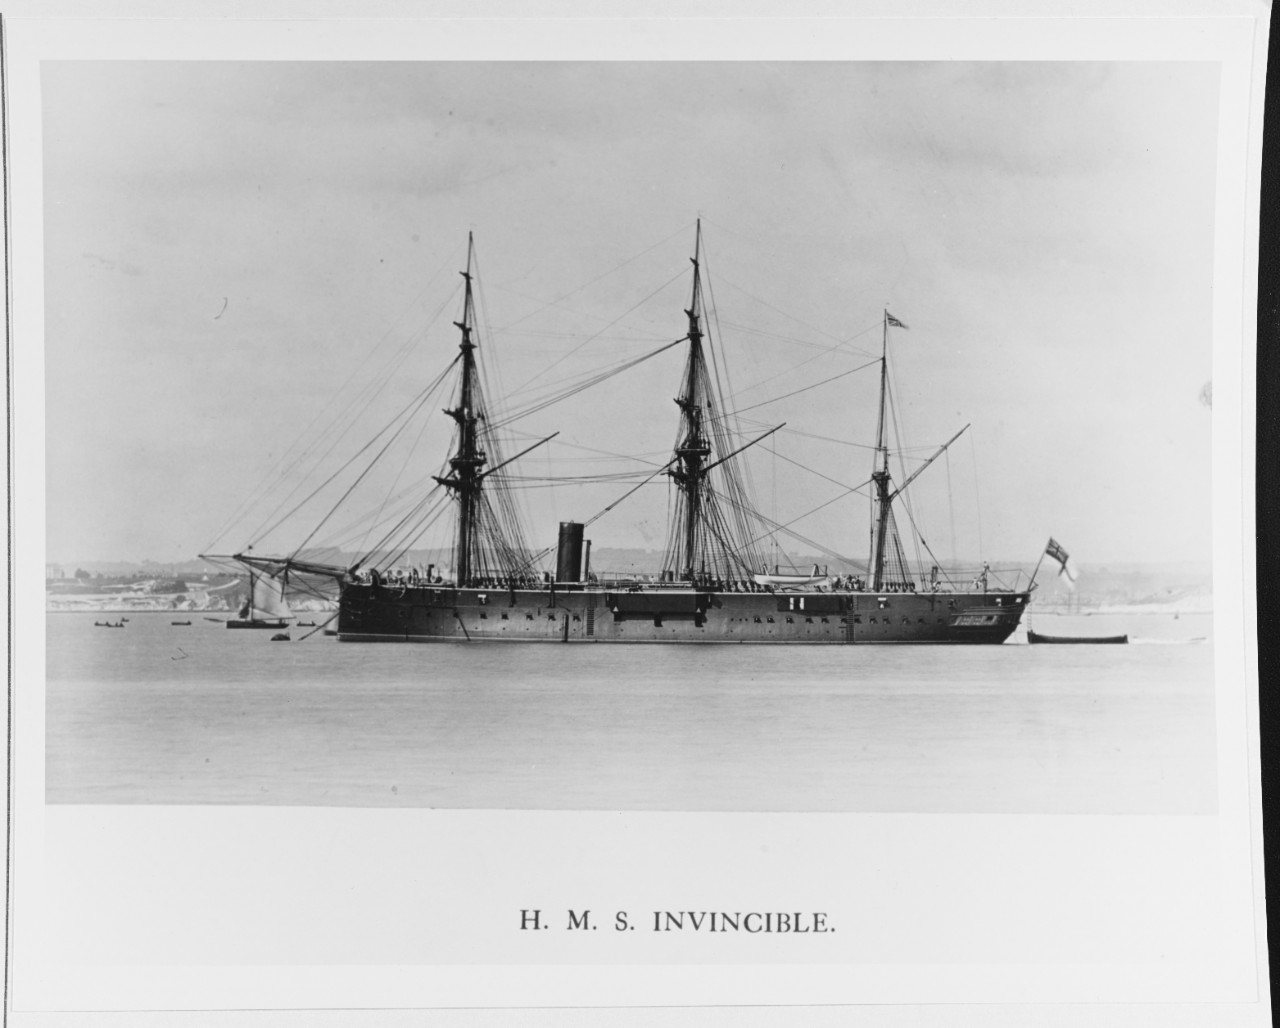 HMS INVINCIBLE (BRITISH BATTLESHIP, 1869)